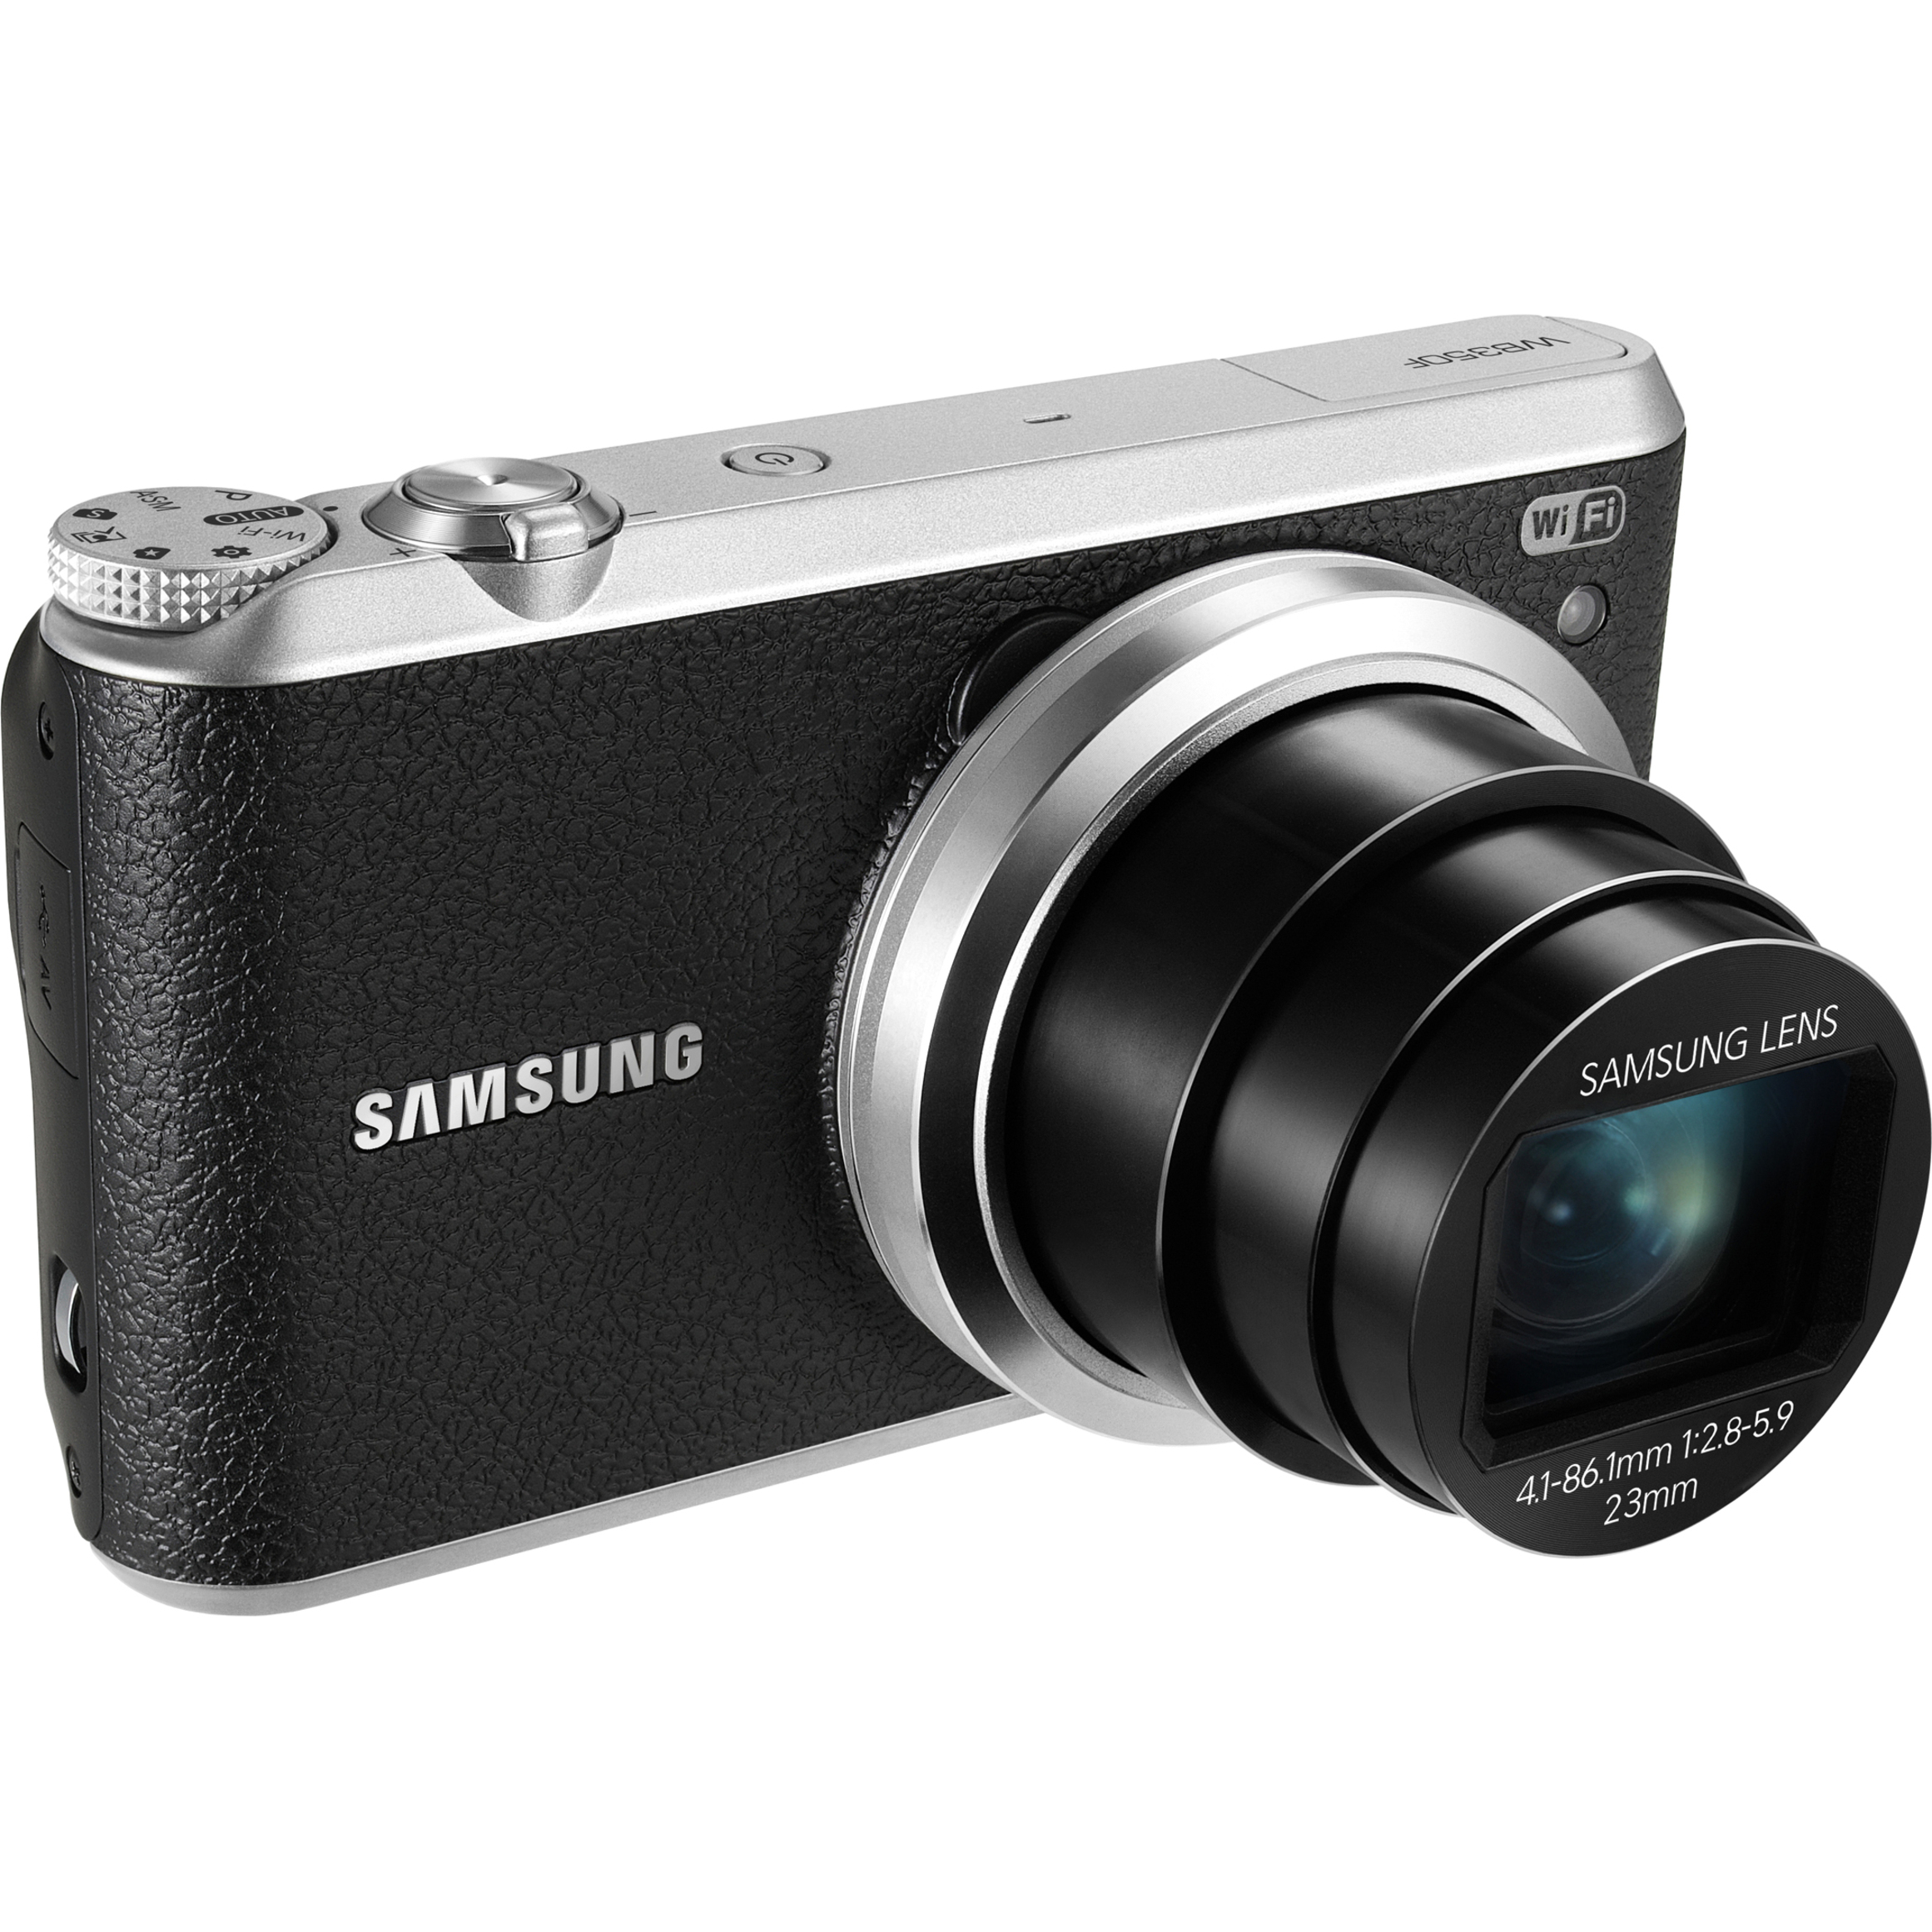 Samsung WB350F 16.3 Megapixel Compact Camera, Black - image 3 of 5